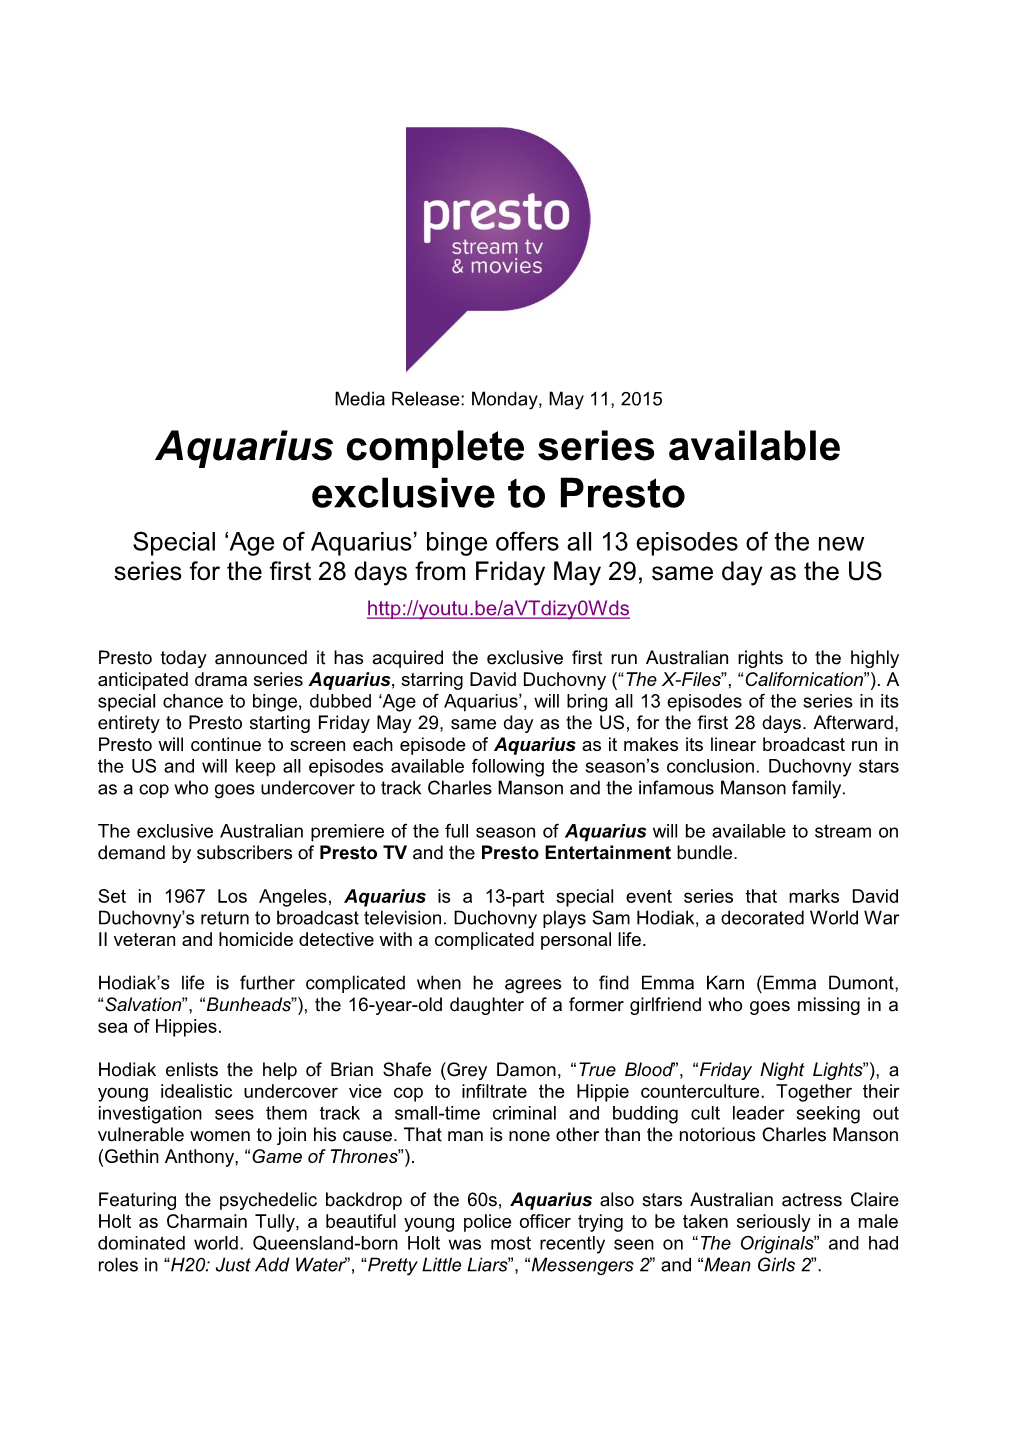 Aquarius Complete Series Available Exclusive to Presto